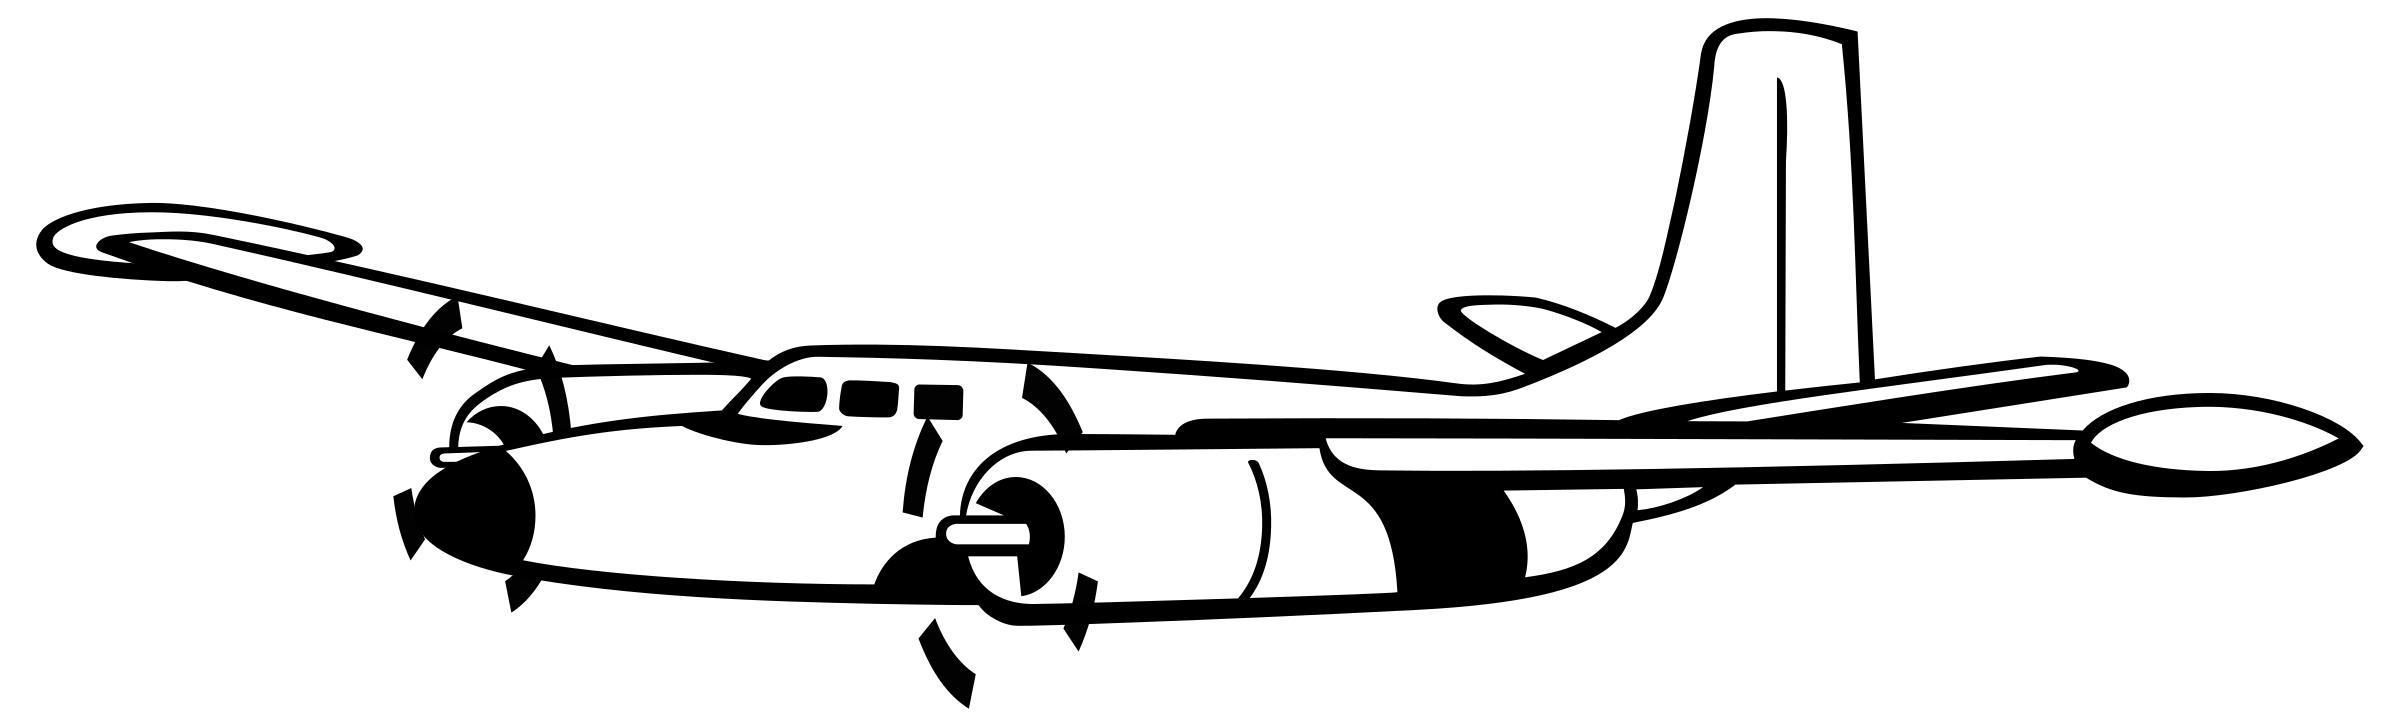 Propeller-driven plane png